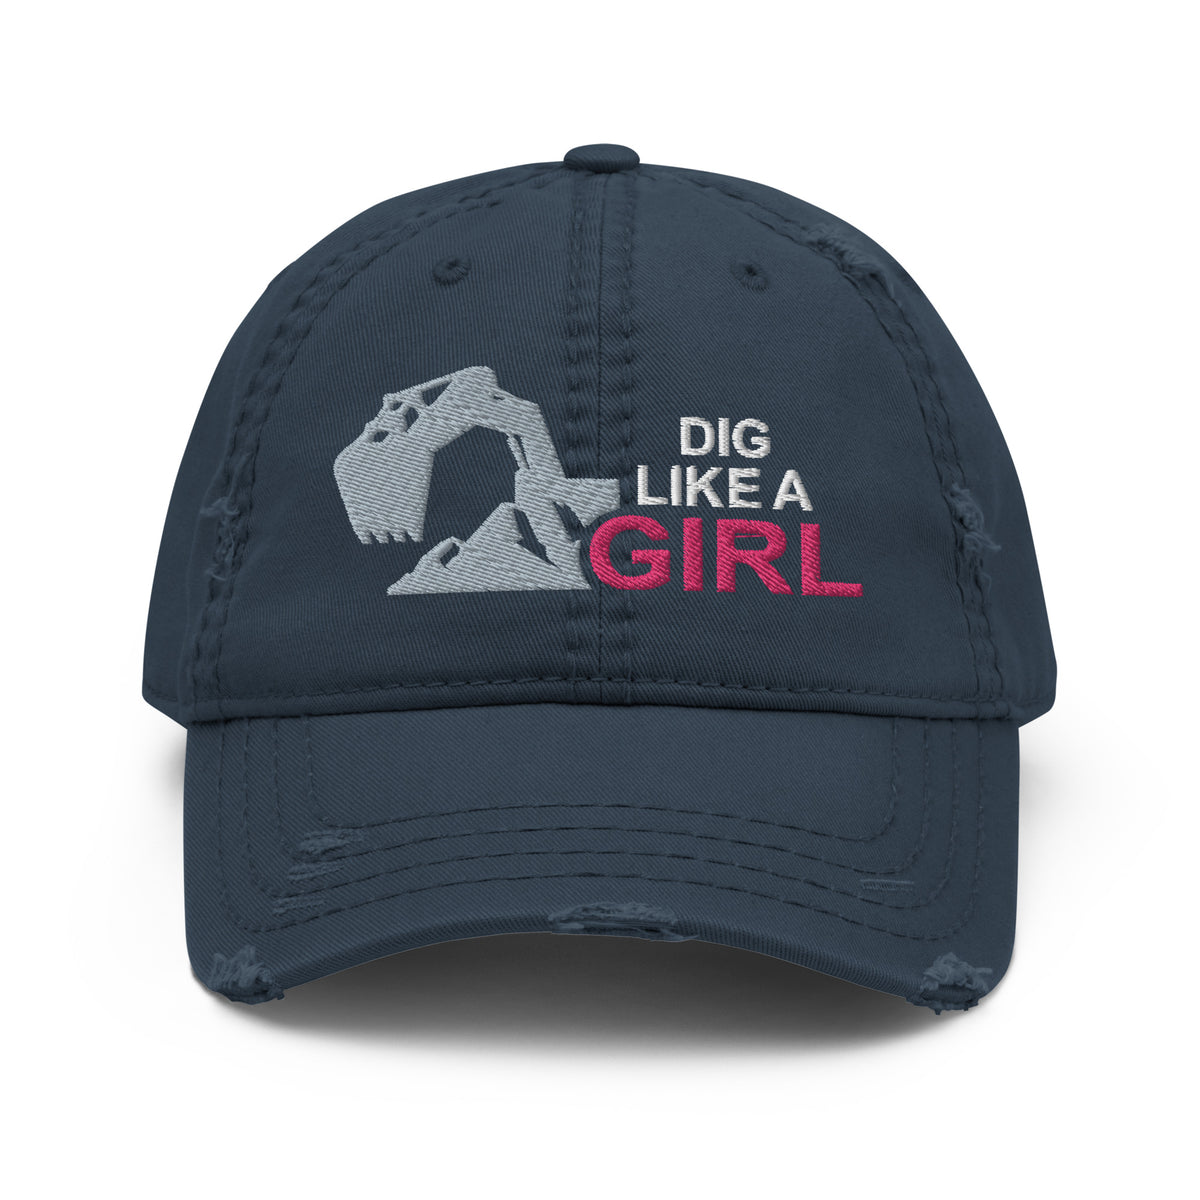 Excavator - Dig Like A Girl - Distressed Dad Hat